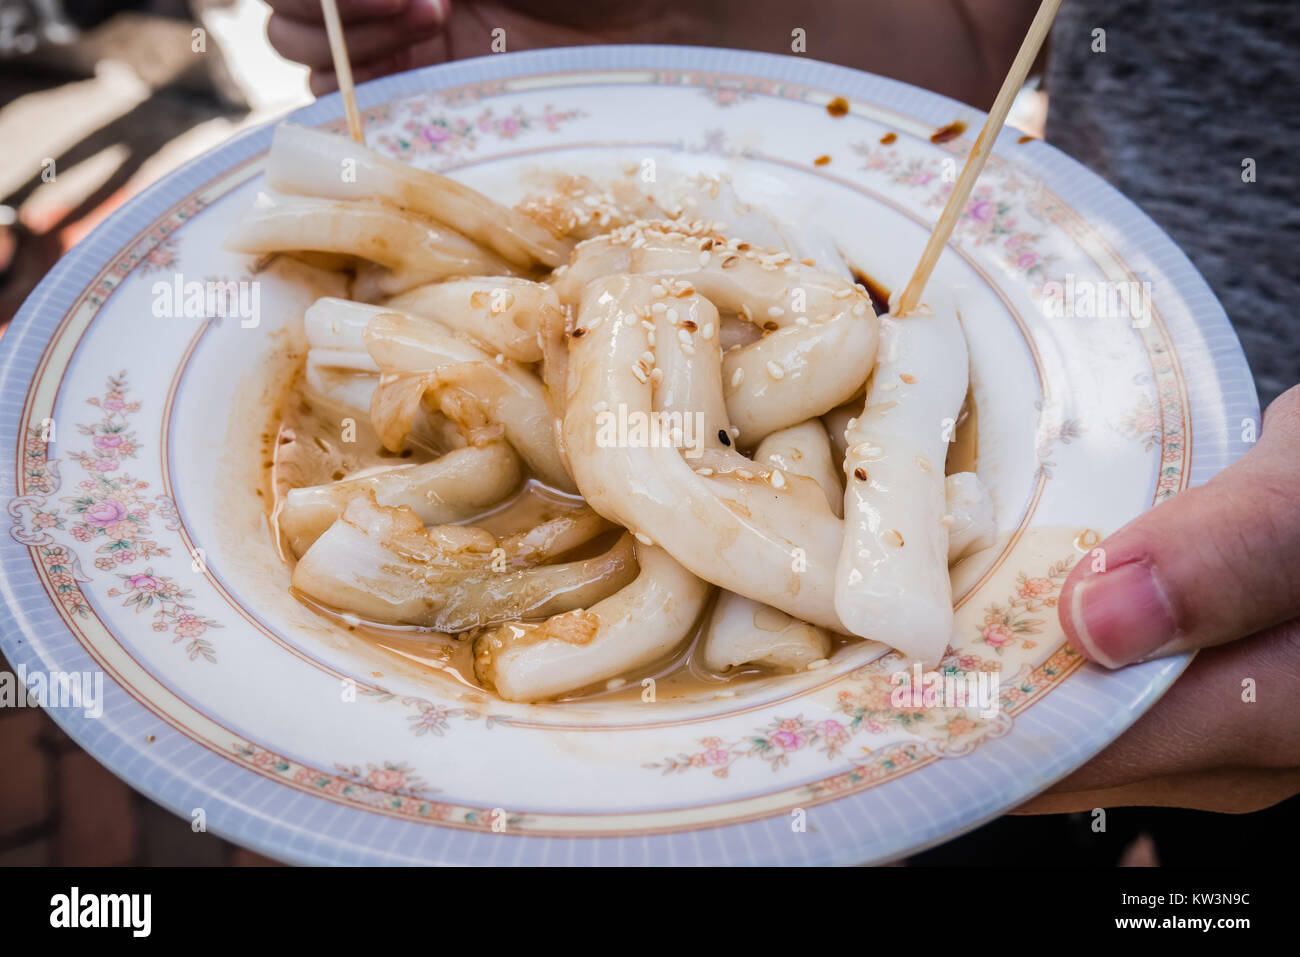 L'alimentation de rue de hong kong avec des nouilles de riz sauce soja Banque D'Images